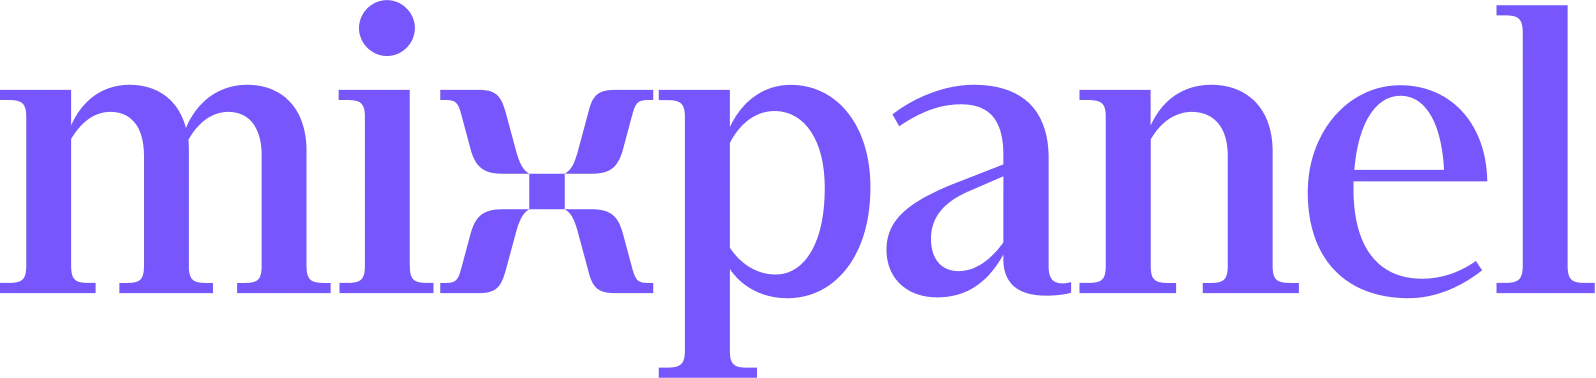 Mixpanel wordmark purple 2x